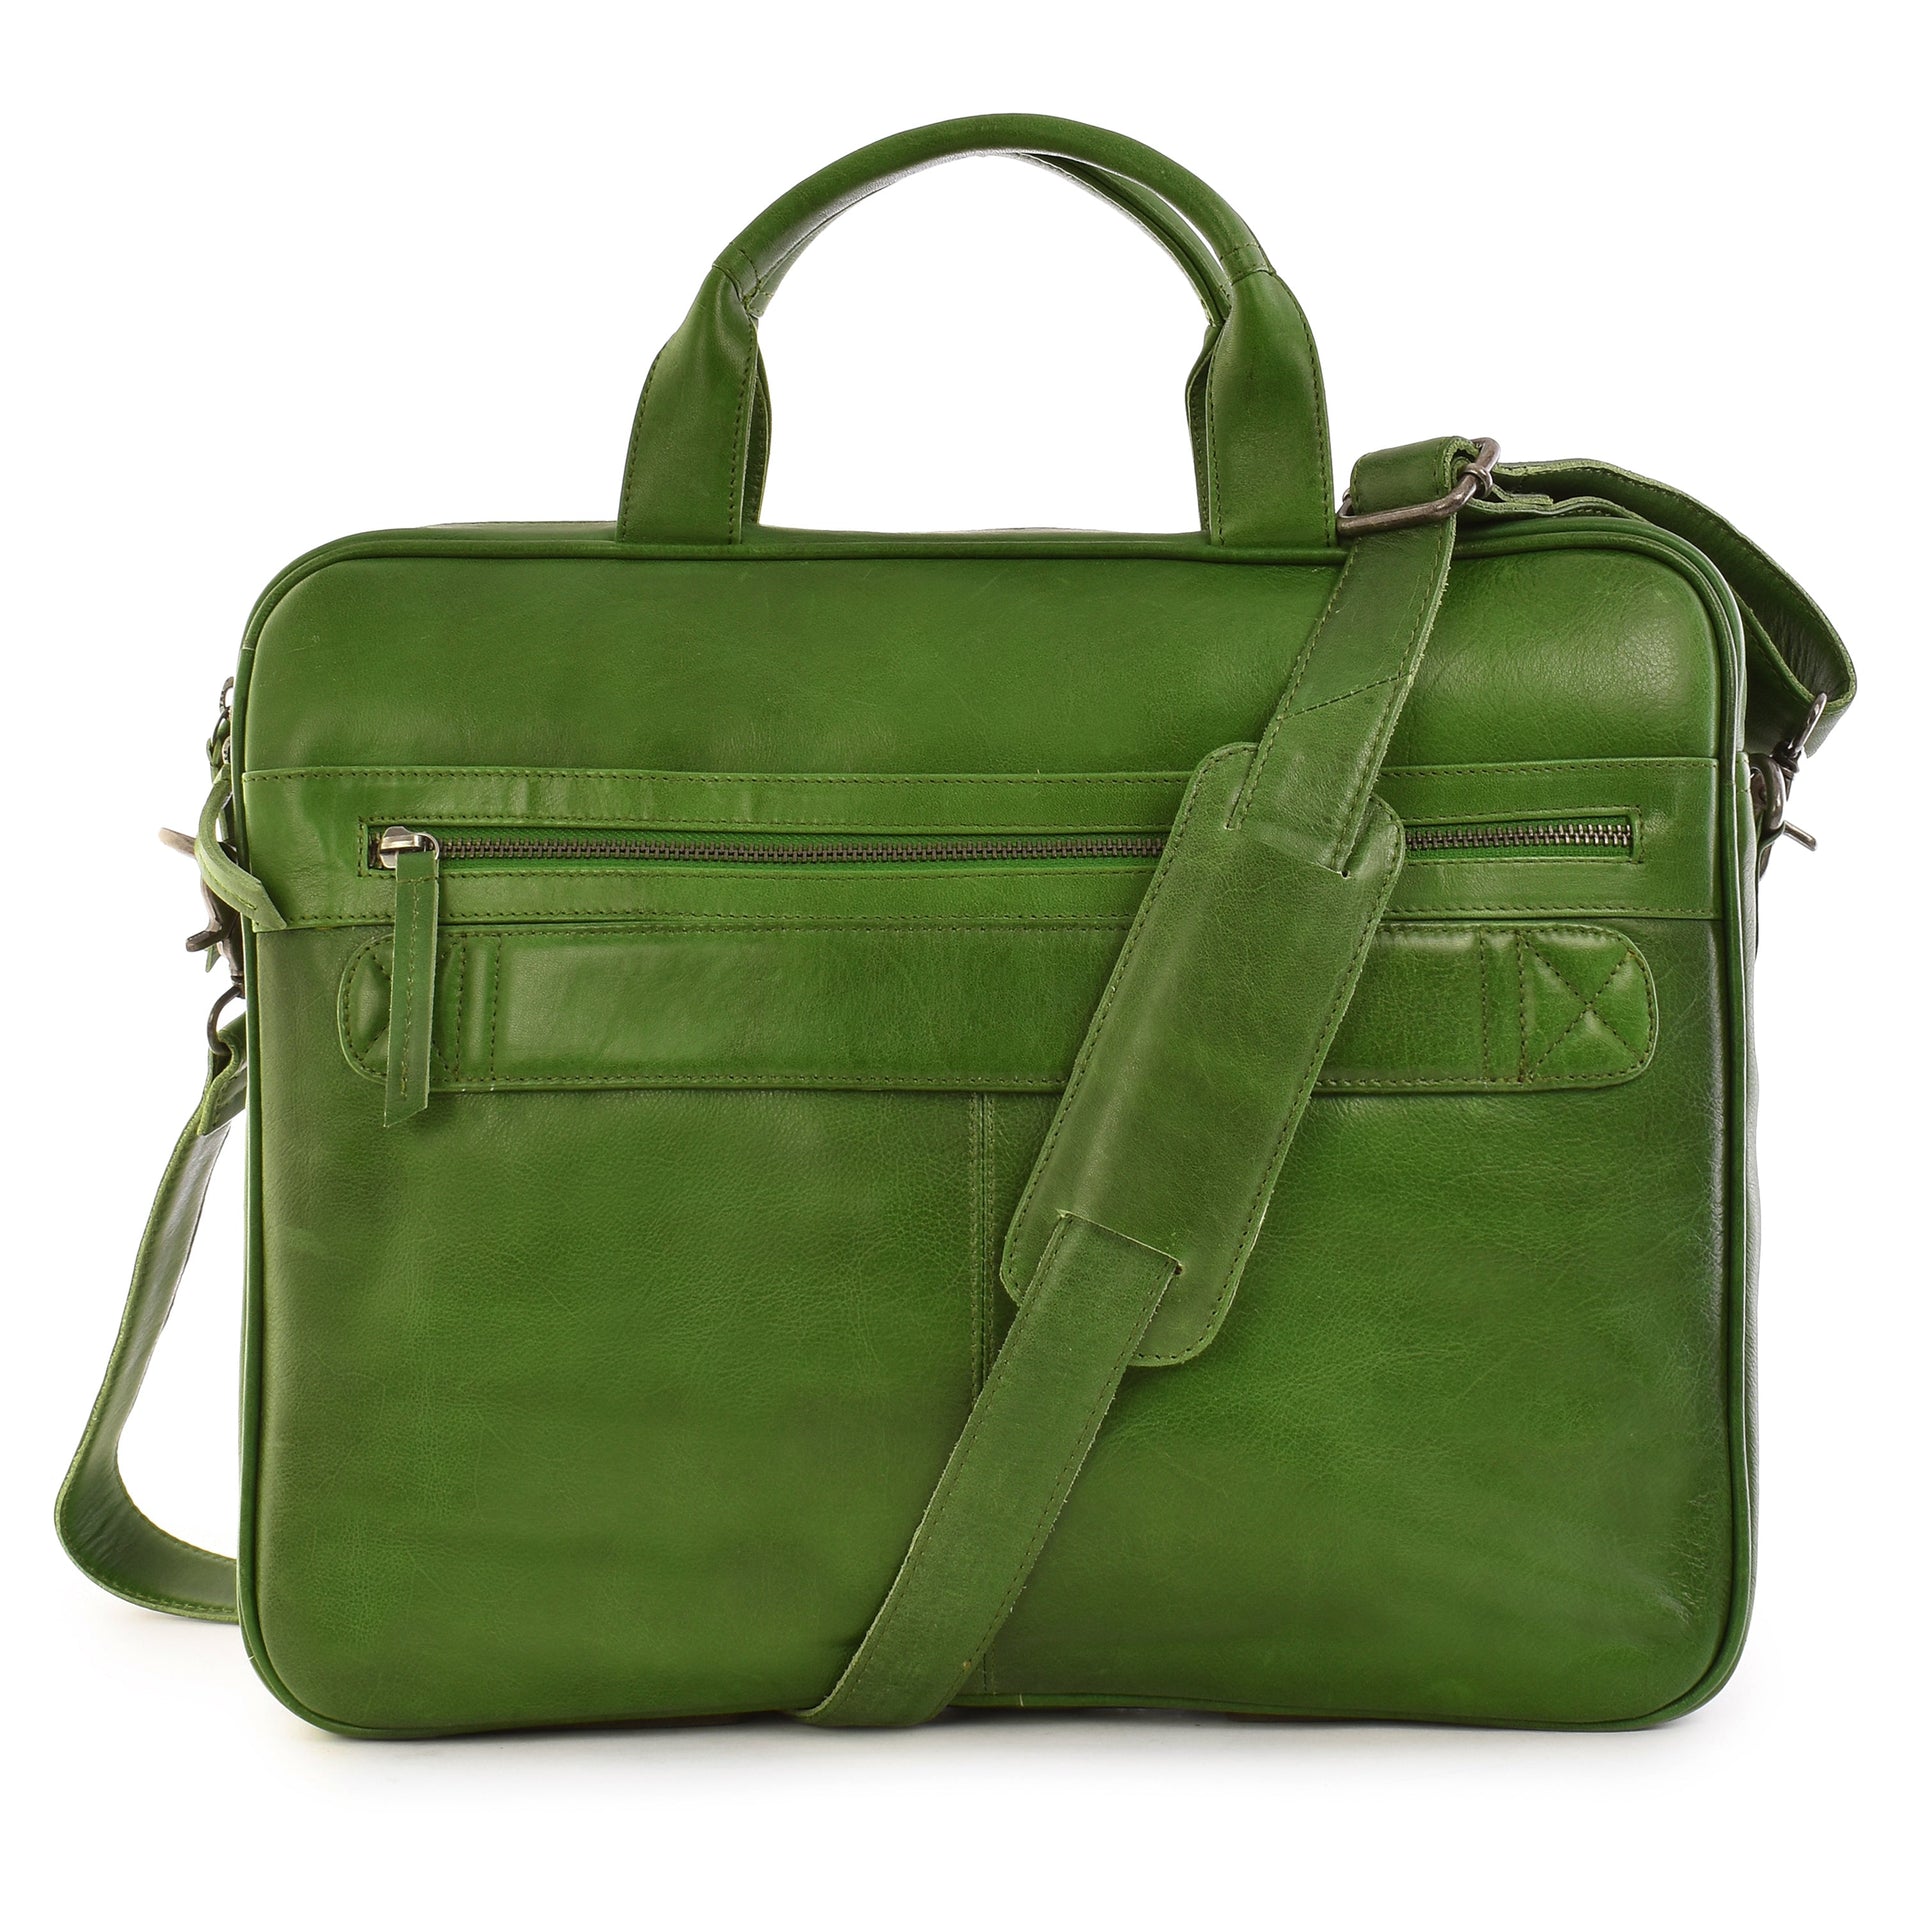 Hartfield Business Bag - Laptop Bags